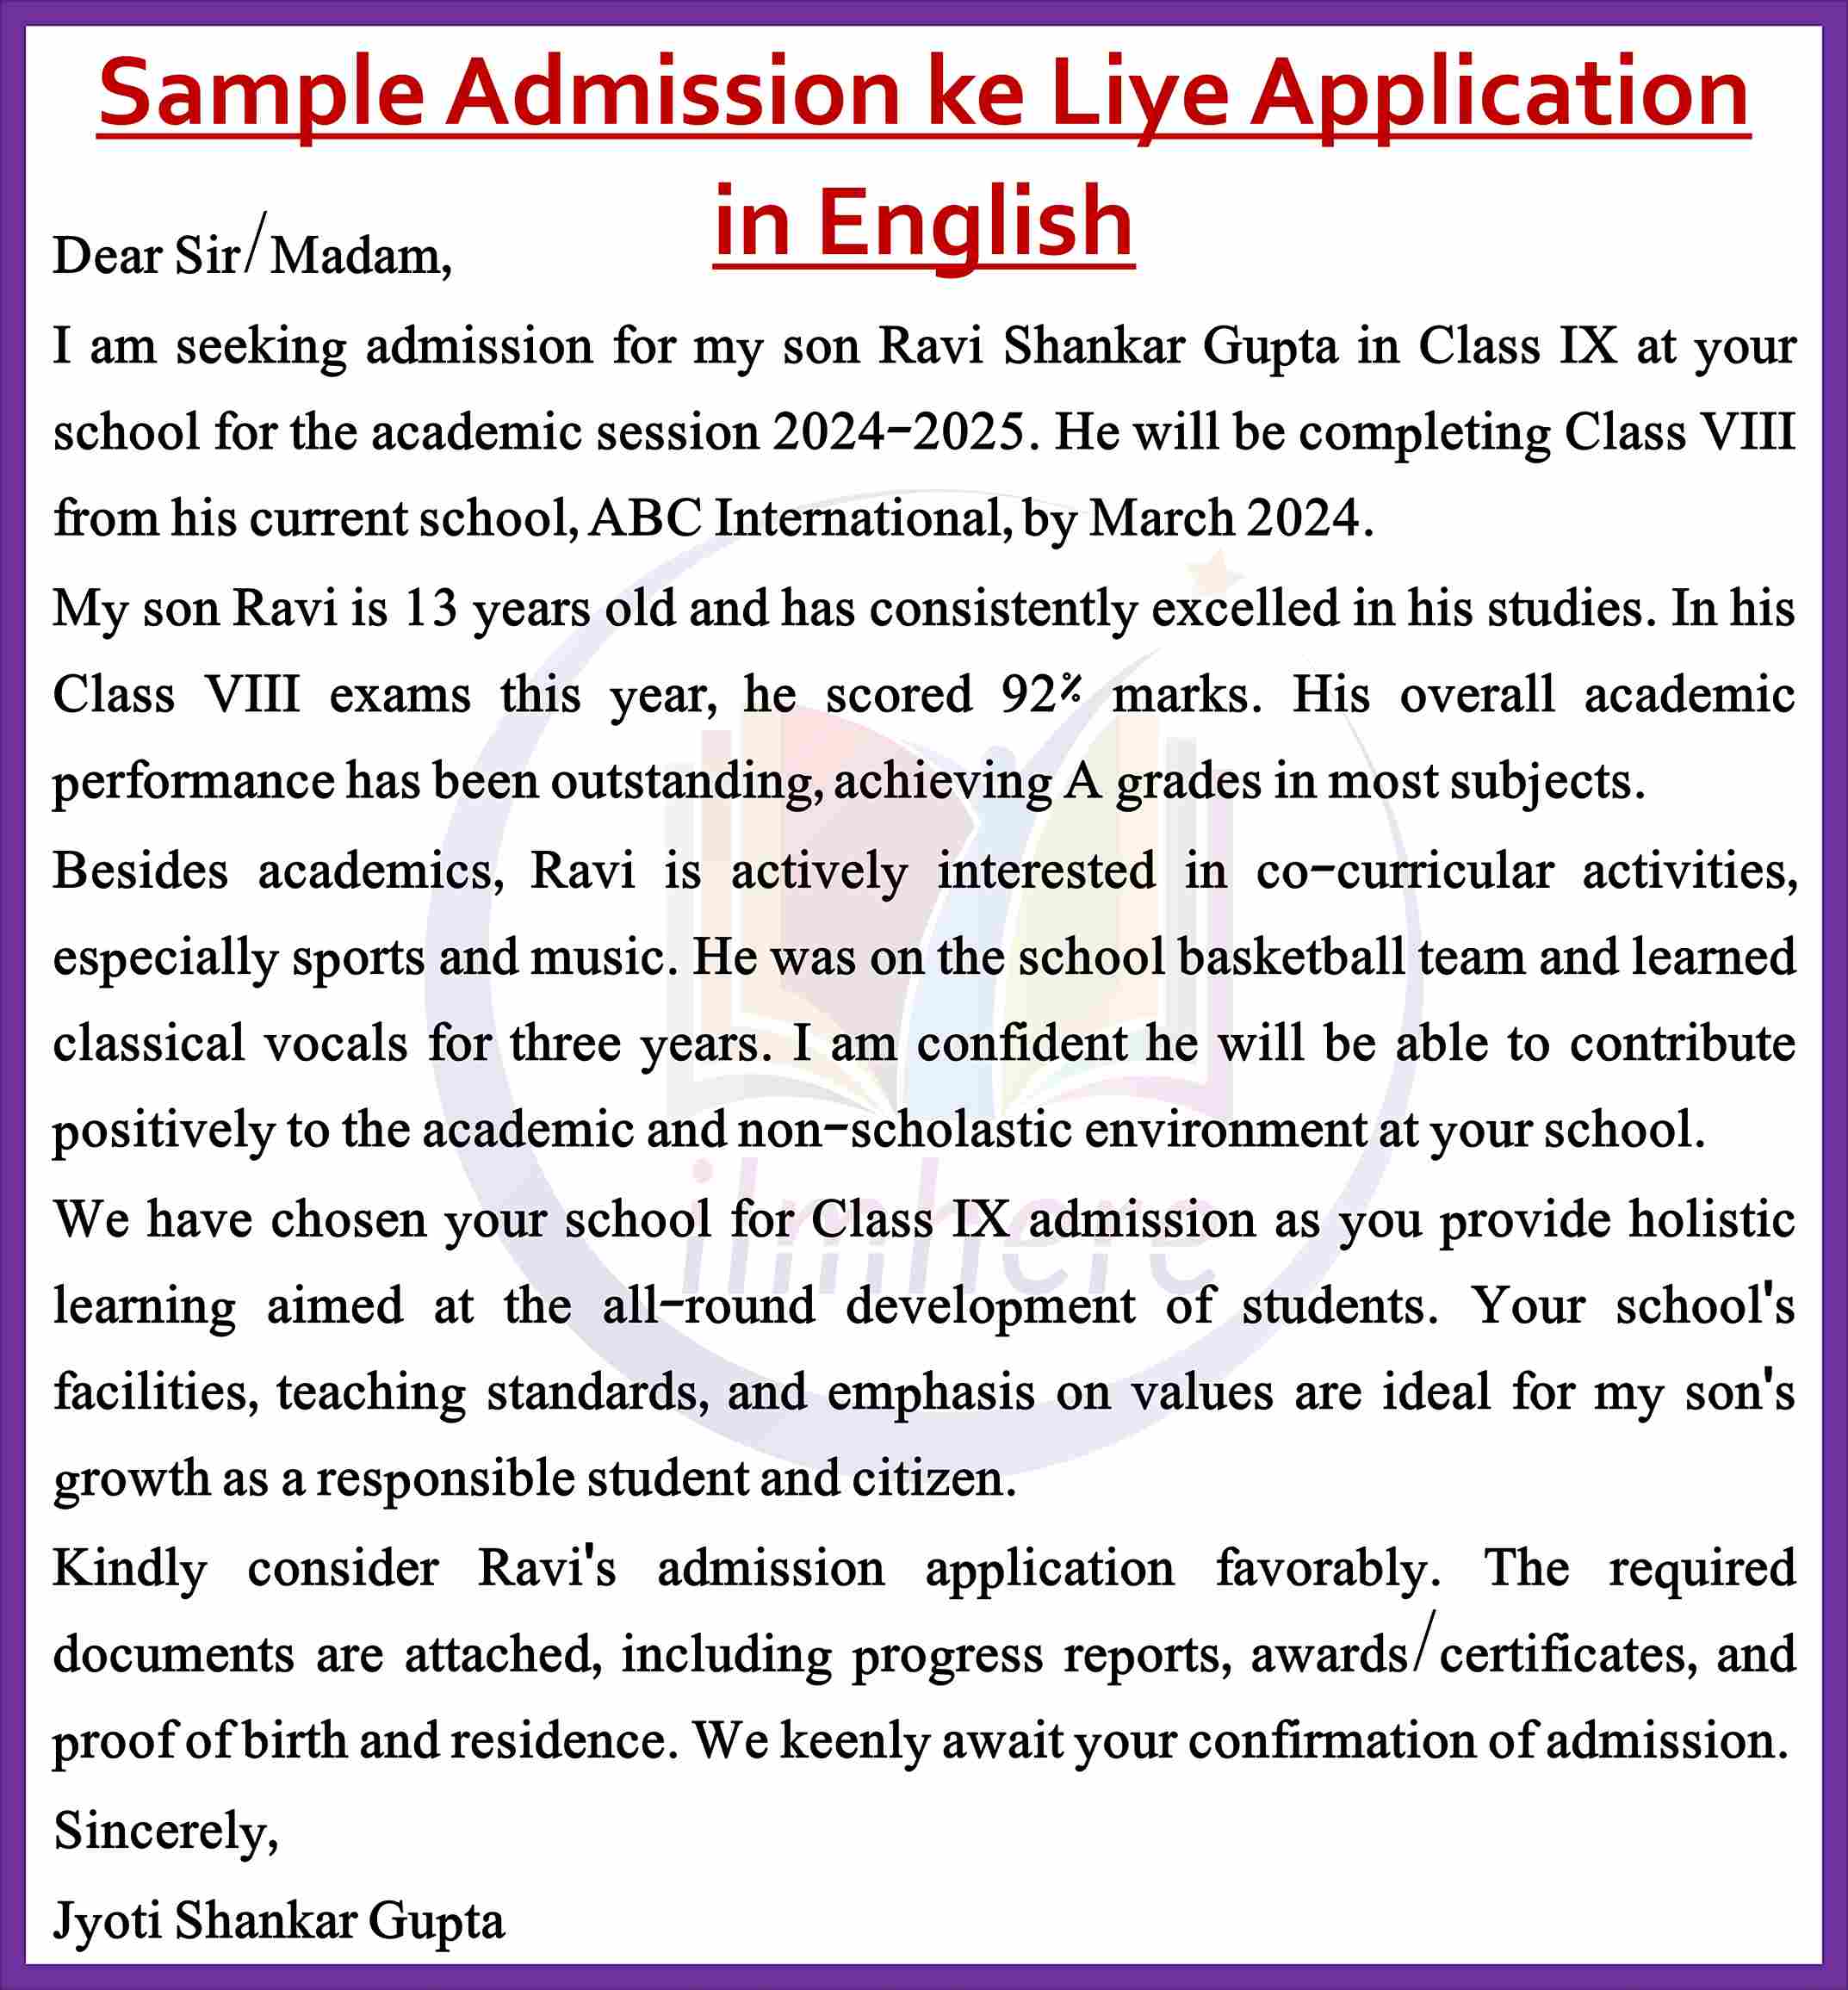 School Admission Application